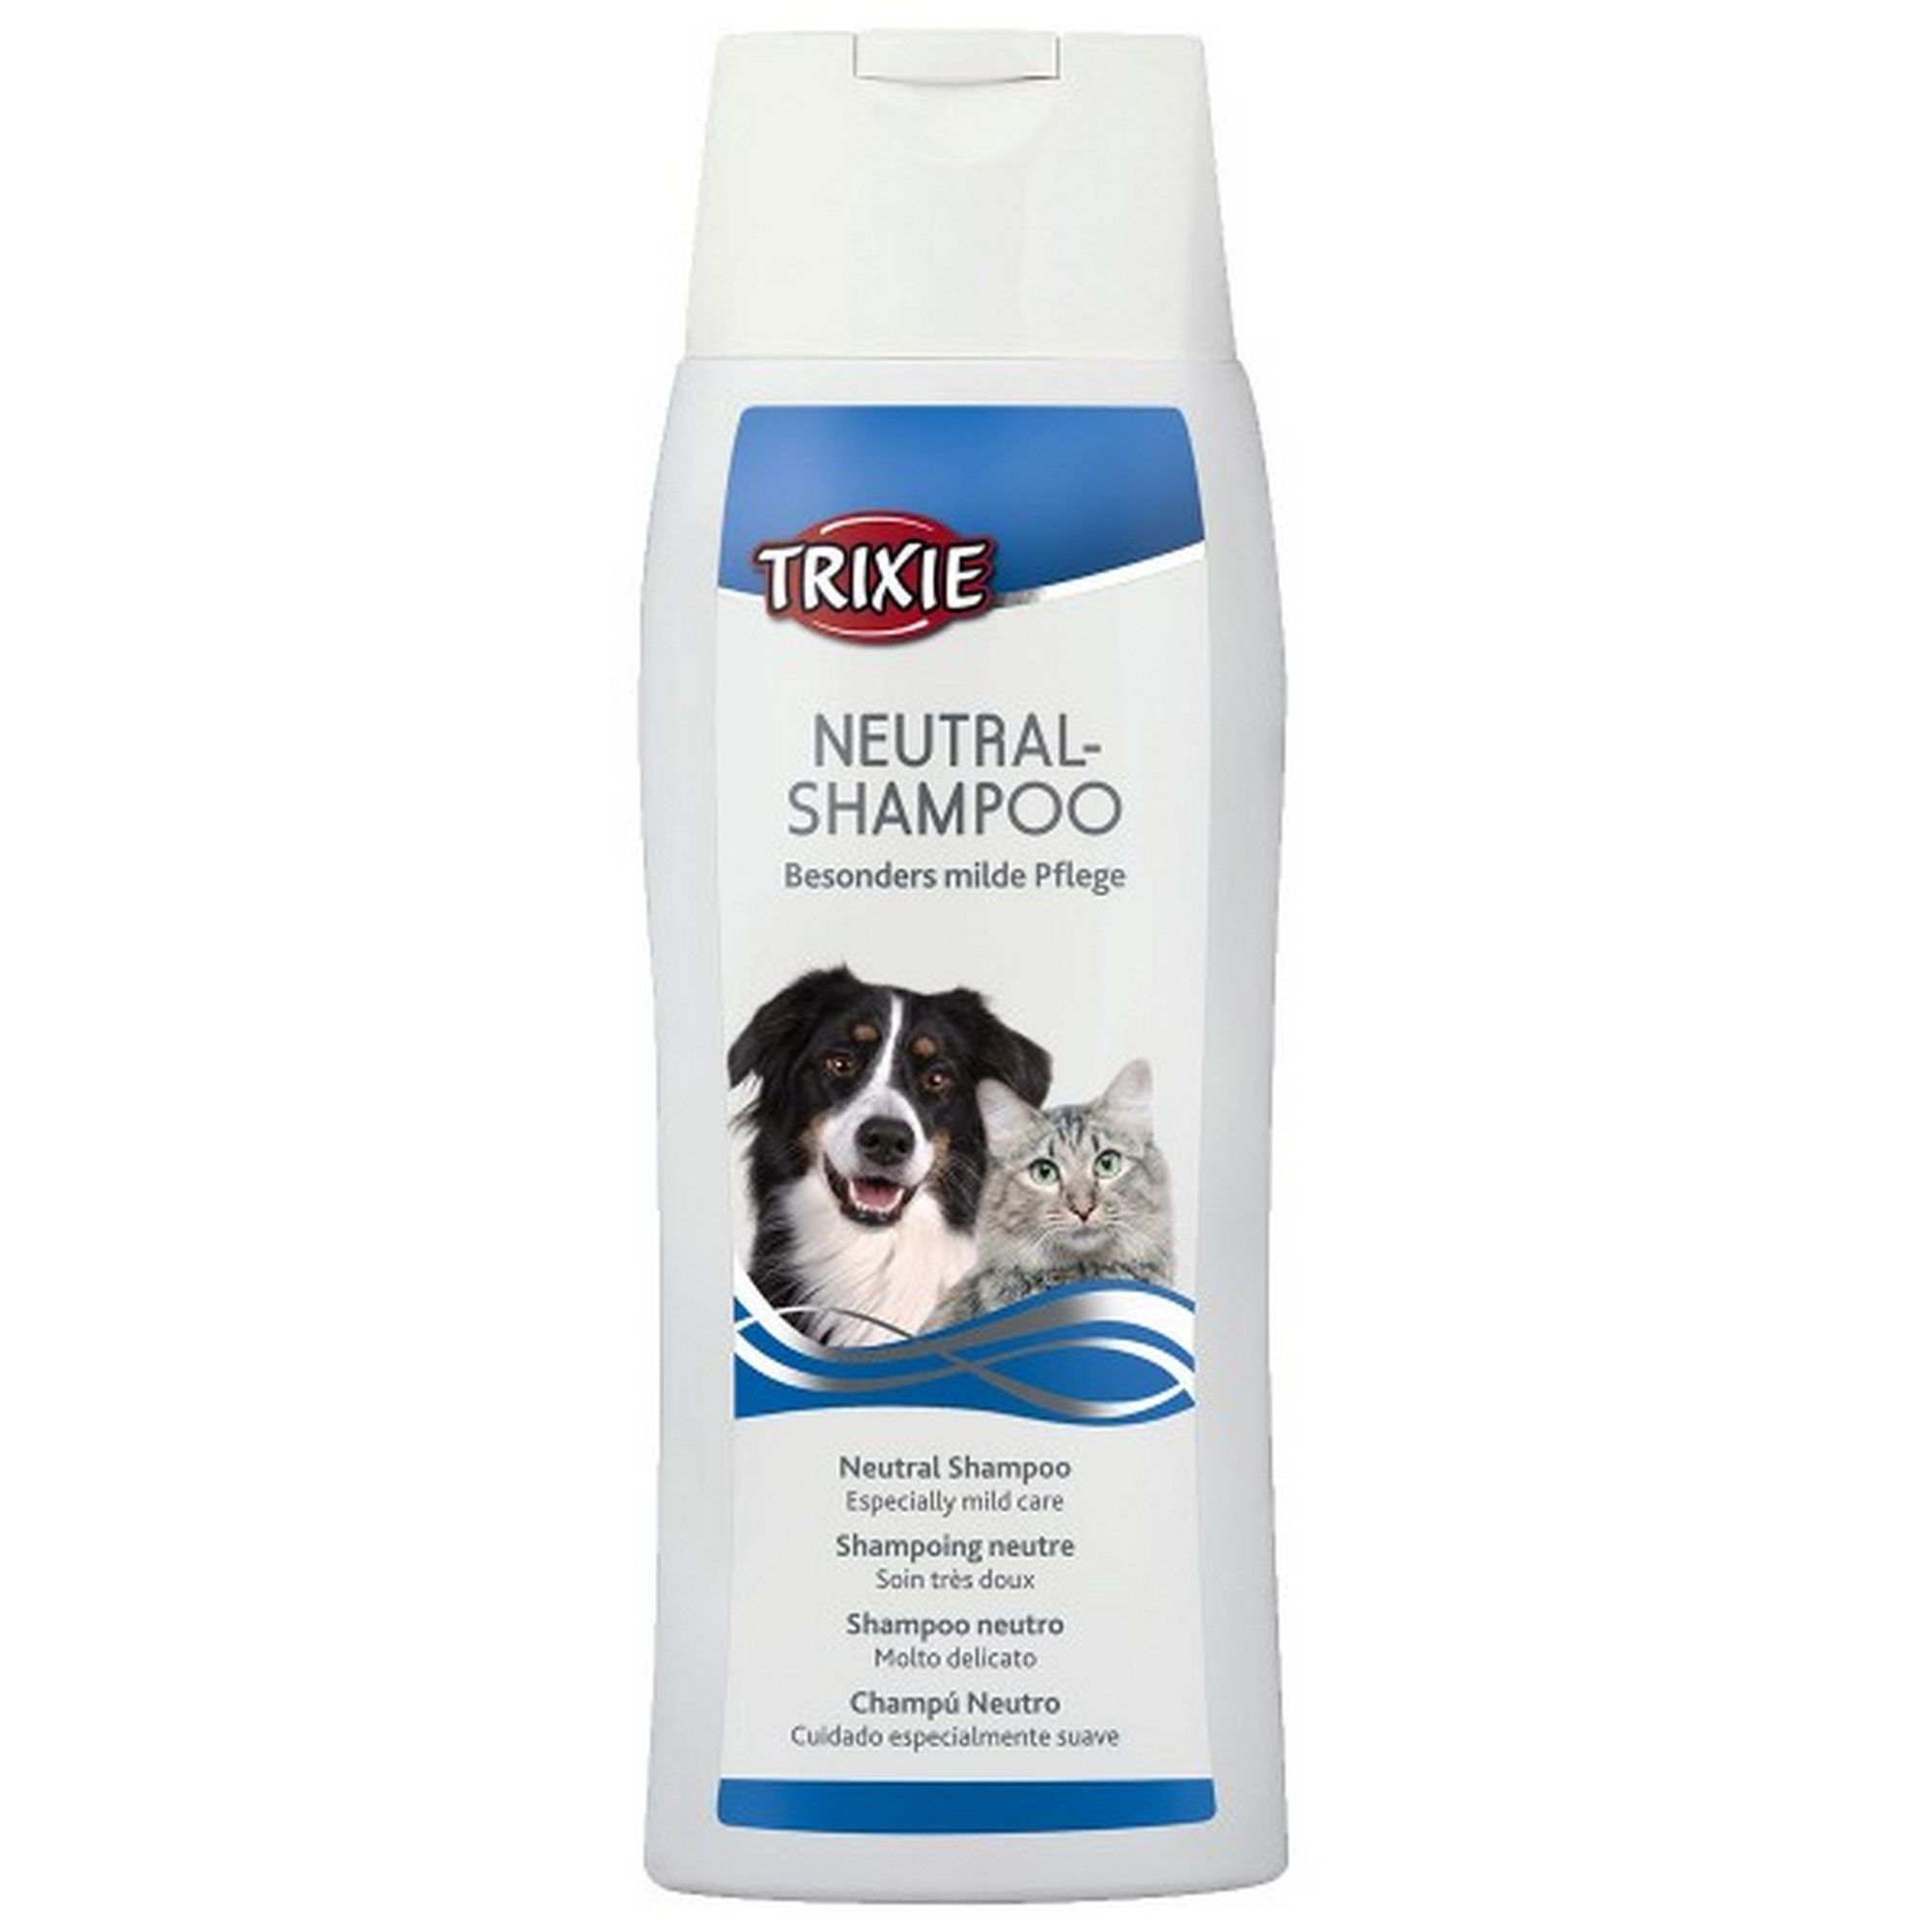 Hunde-/Katzen-Neutral-Shampoo 250 ml + product picture